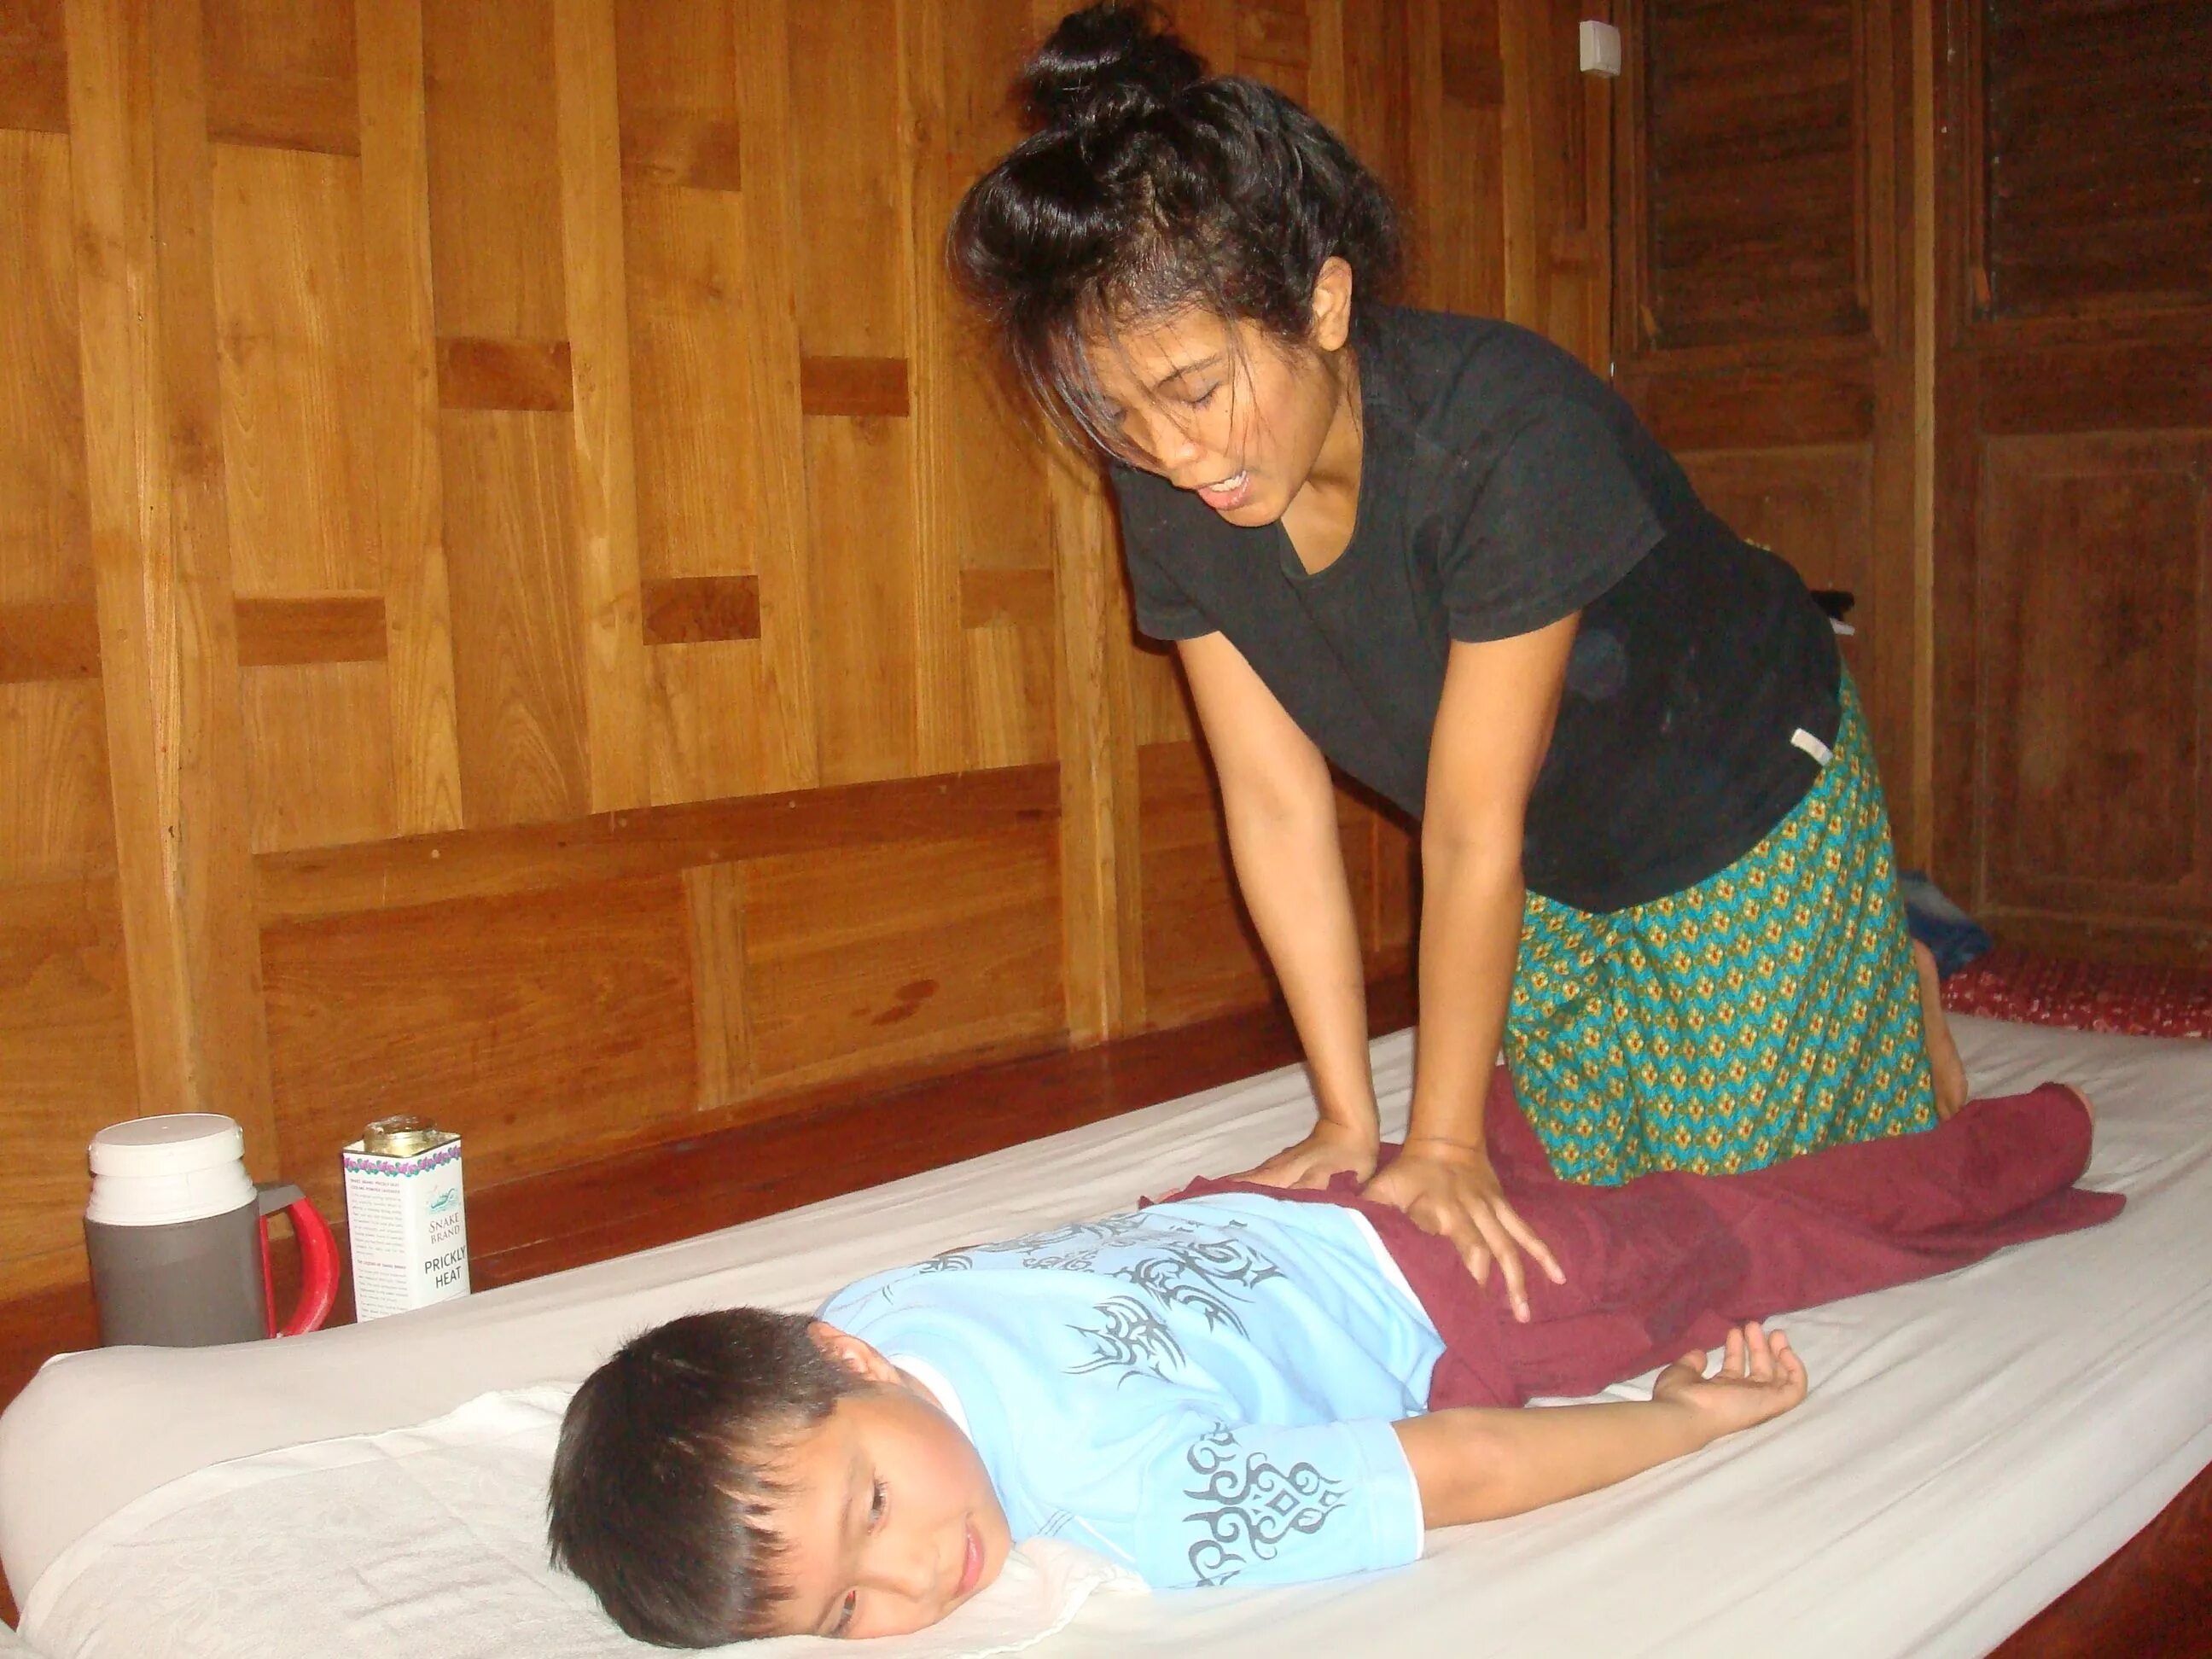 Сын массаж мама потом. Тайский массаж детям. Массаж маме. Американский массаж мом. Woman and Kid массаж с одеждами.